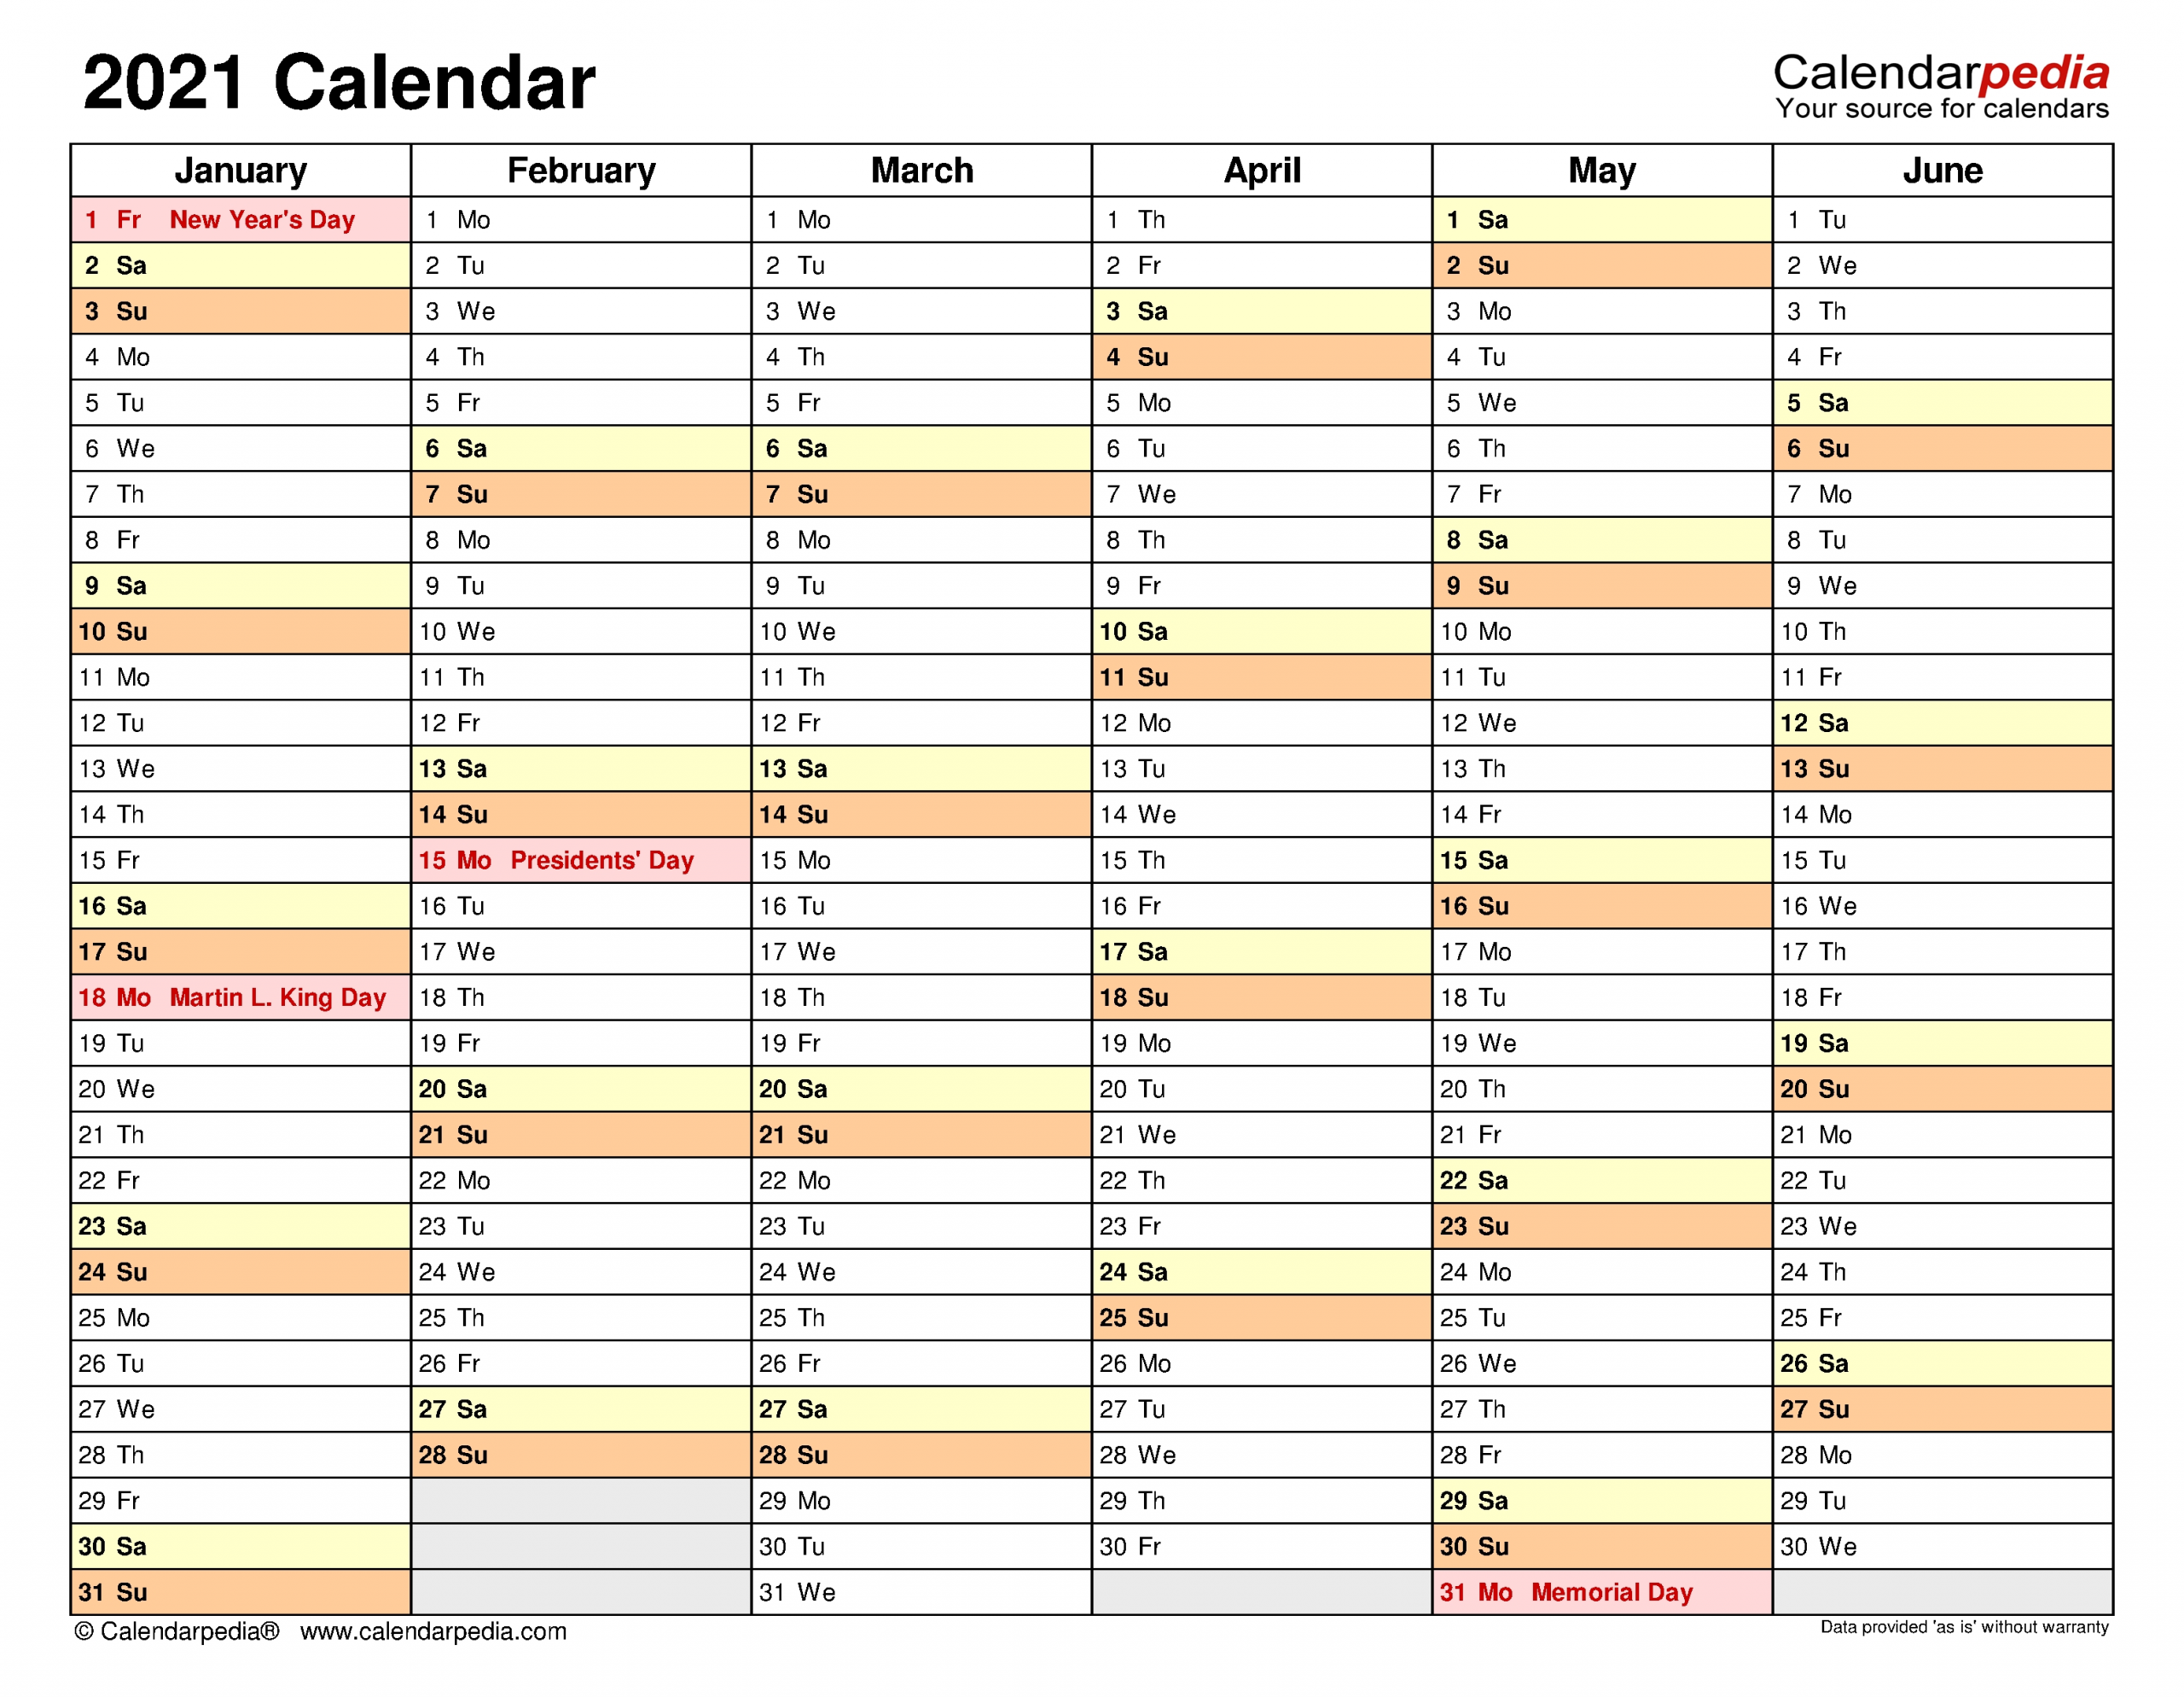 2021 Calendar - Free Printable Excel Templates - Calendarpedia-Download 2021 Philippine Blank Calendar In Excel